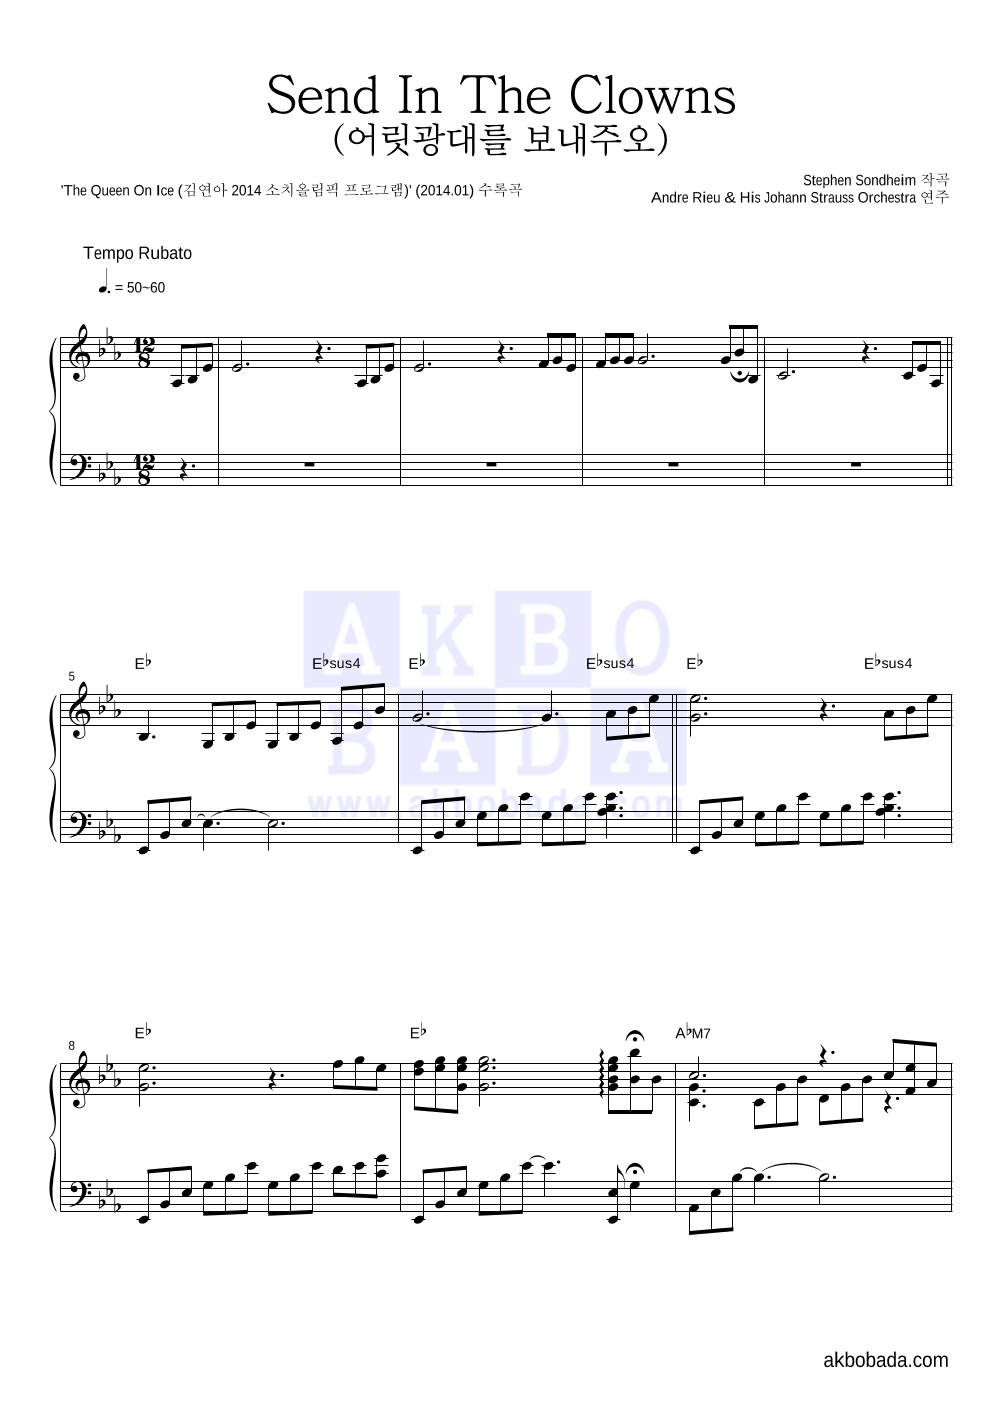 Andre Rieu & His Johann Strauss Orchestra - Send In The Clowns (어릿광대를 보내주오) (김연아 2014소치올림픽 쇼트프로그램) 피아노 2단 악보 